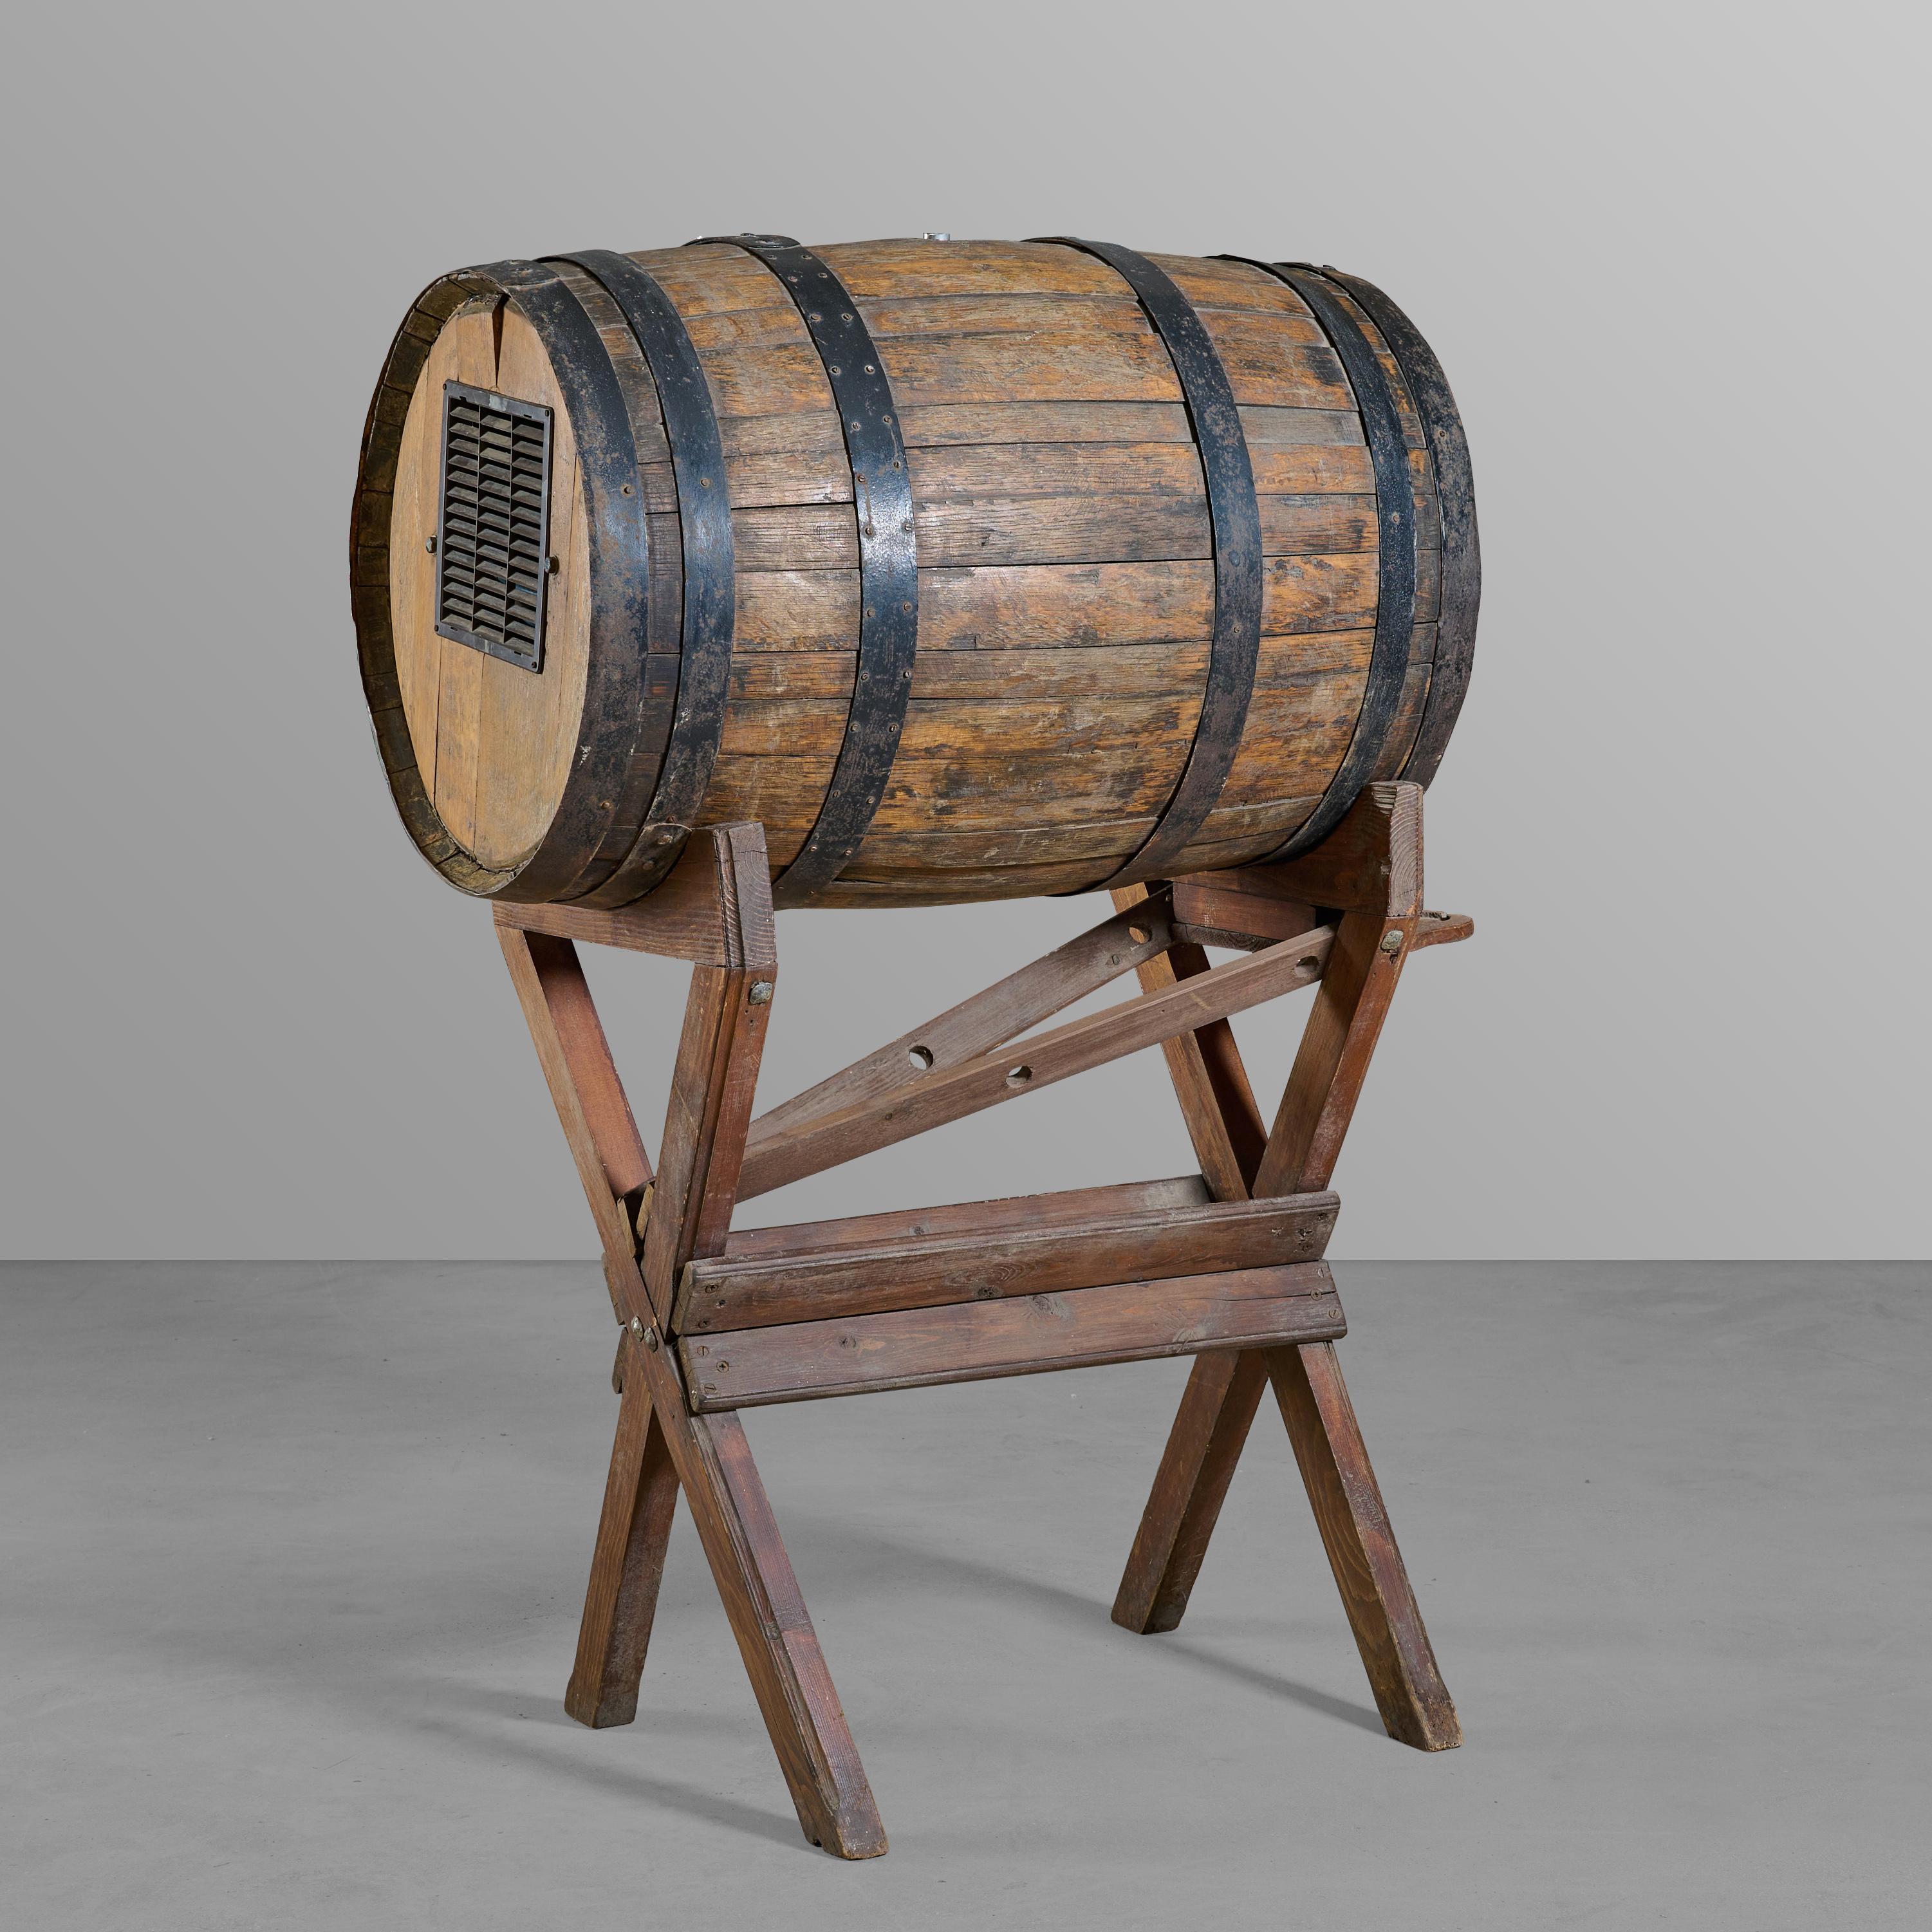 wooden barrel stand